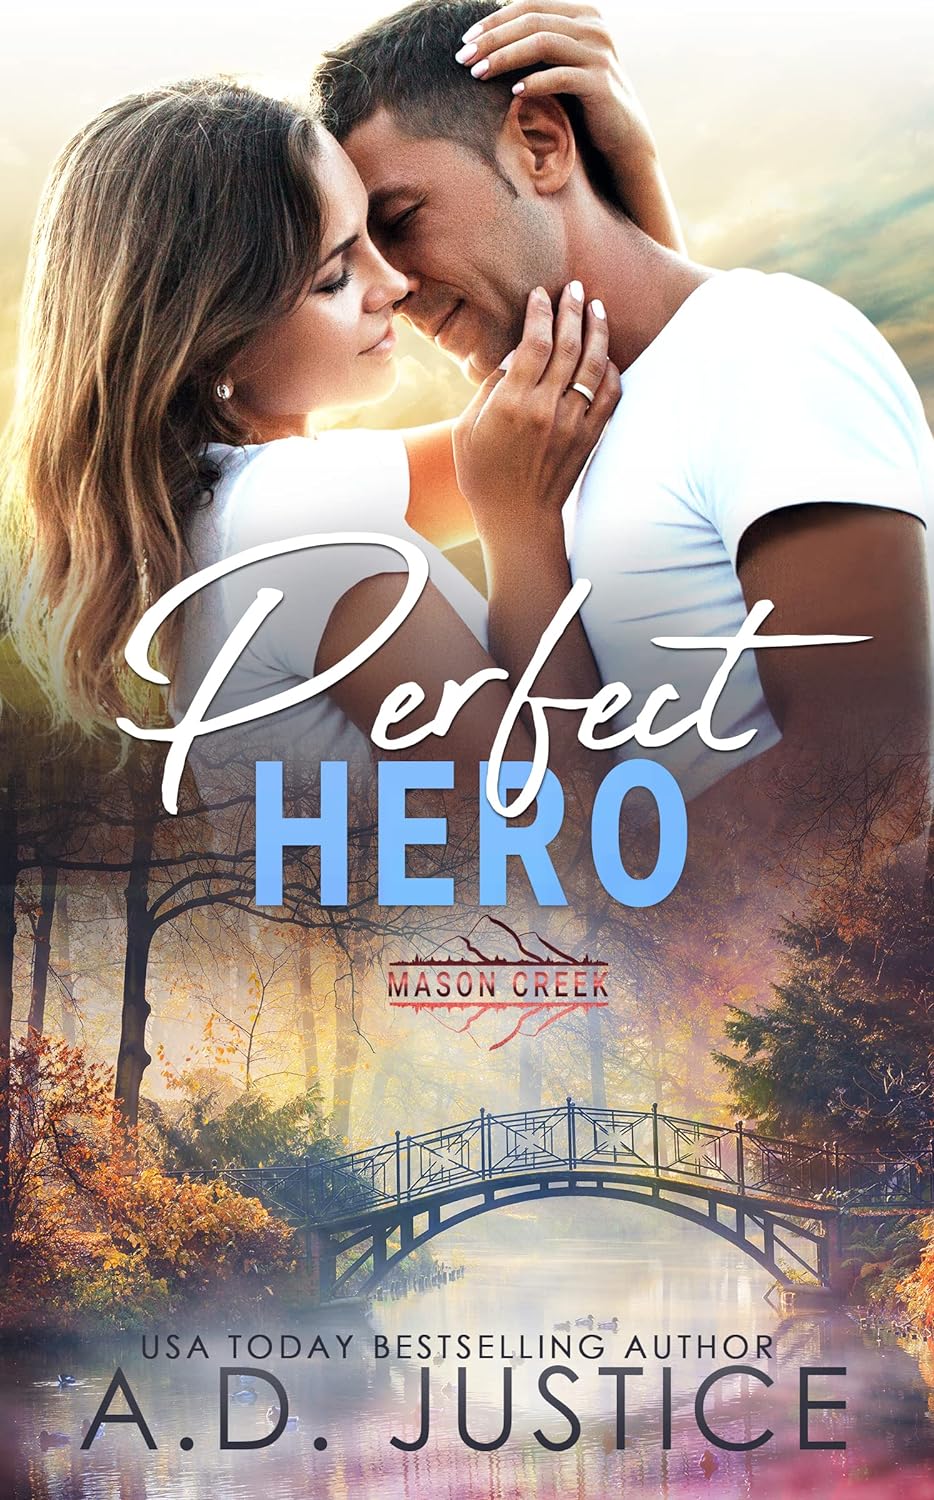 Perfect Hero (Mason Creek Book - A.D. Justice